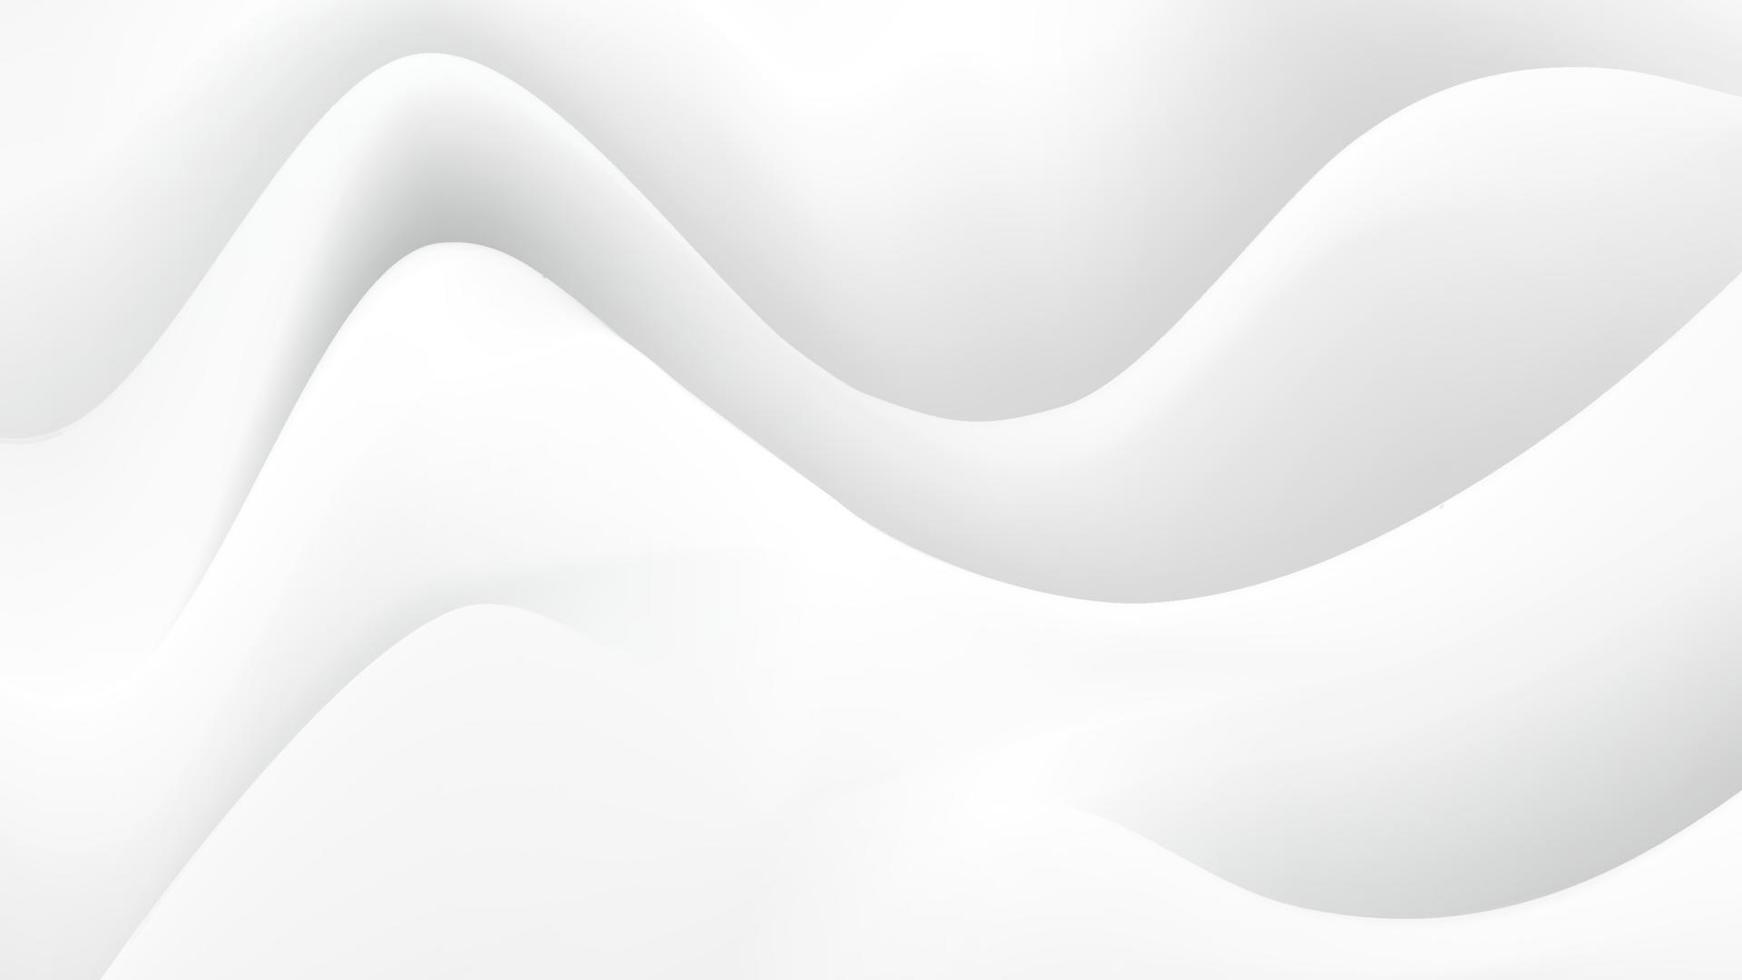 gladde witte golf abstracte achtergrond vector